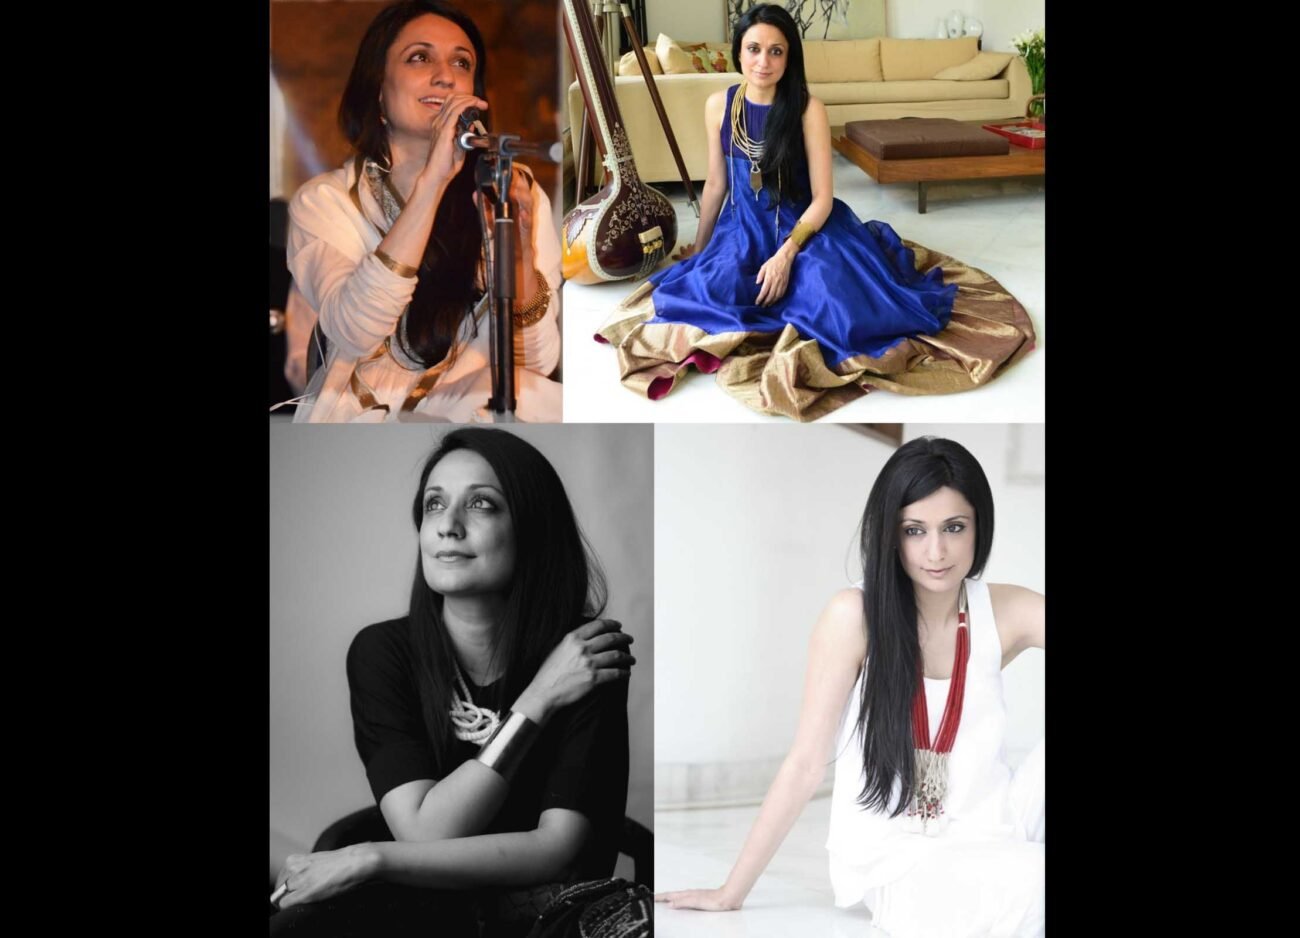 Studying Both Indian And Western Music Has Opened My Mind: Sonam Kalra